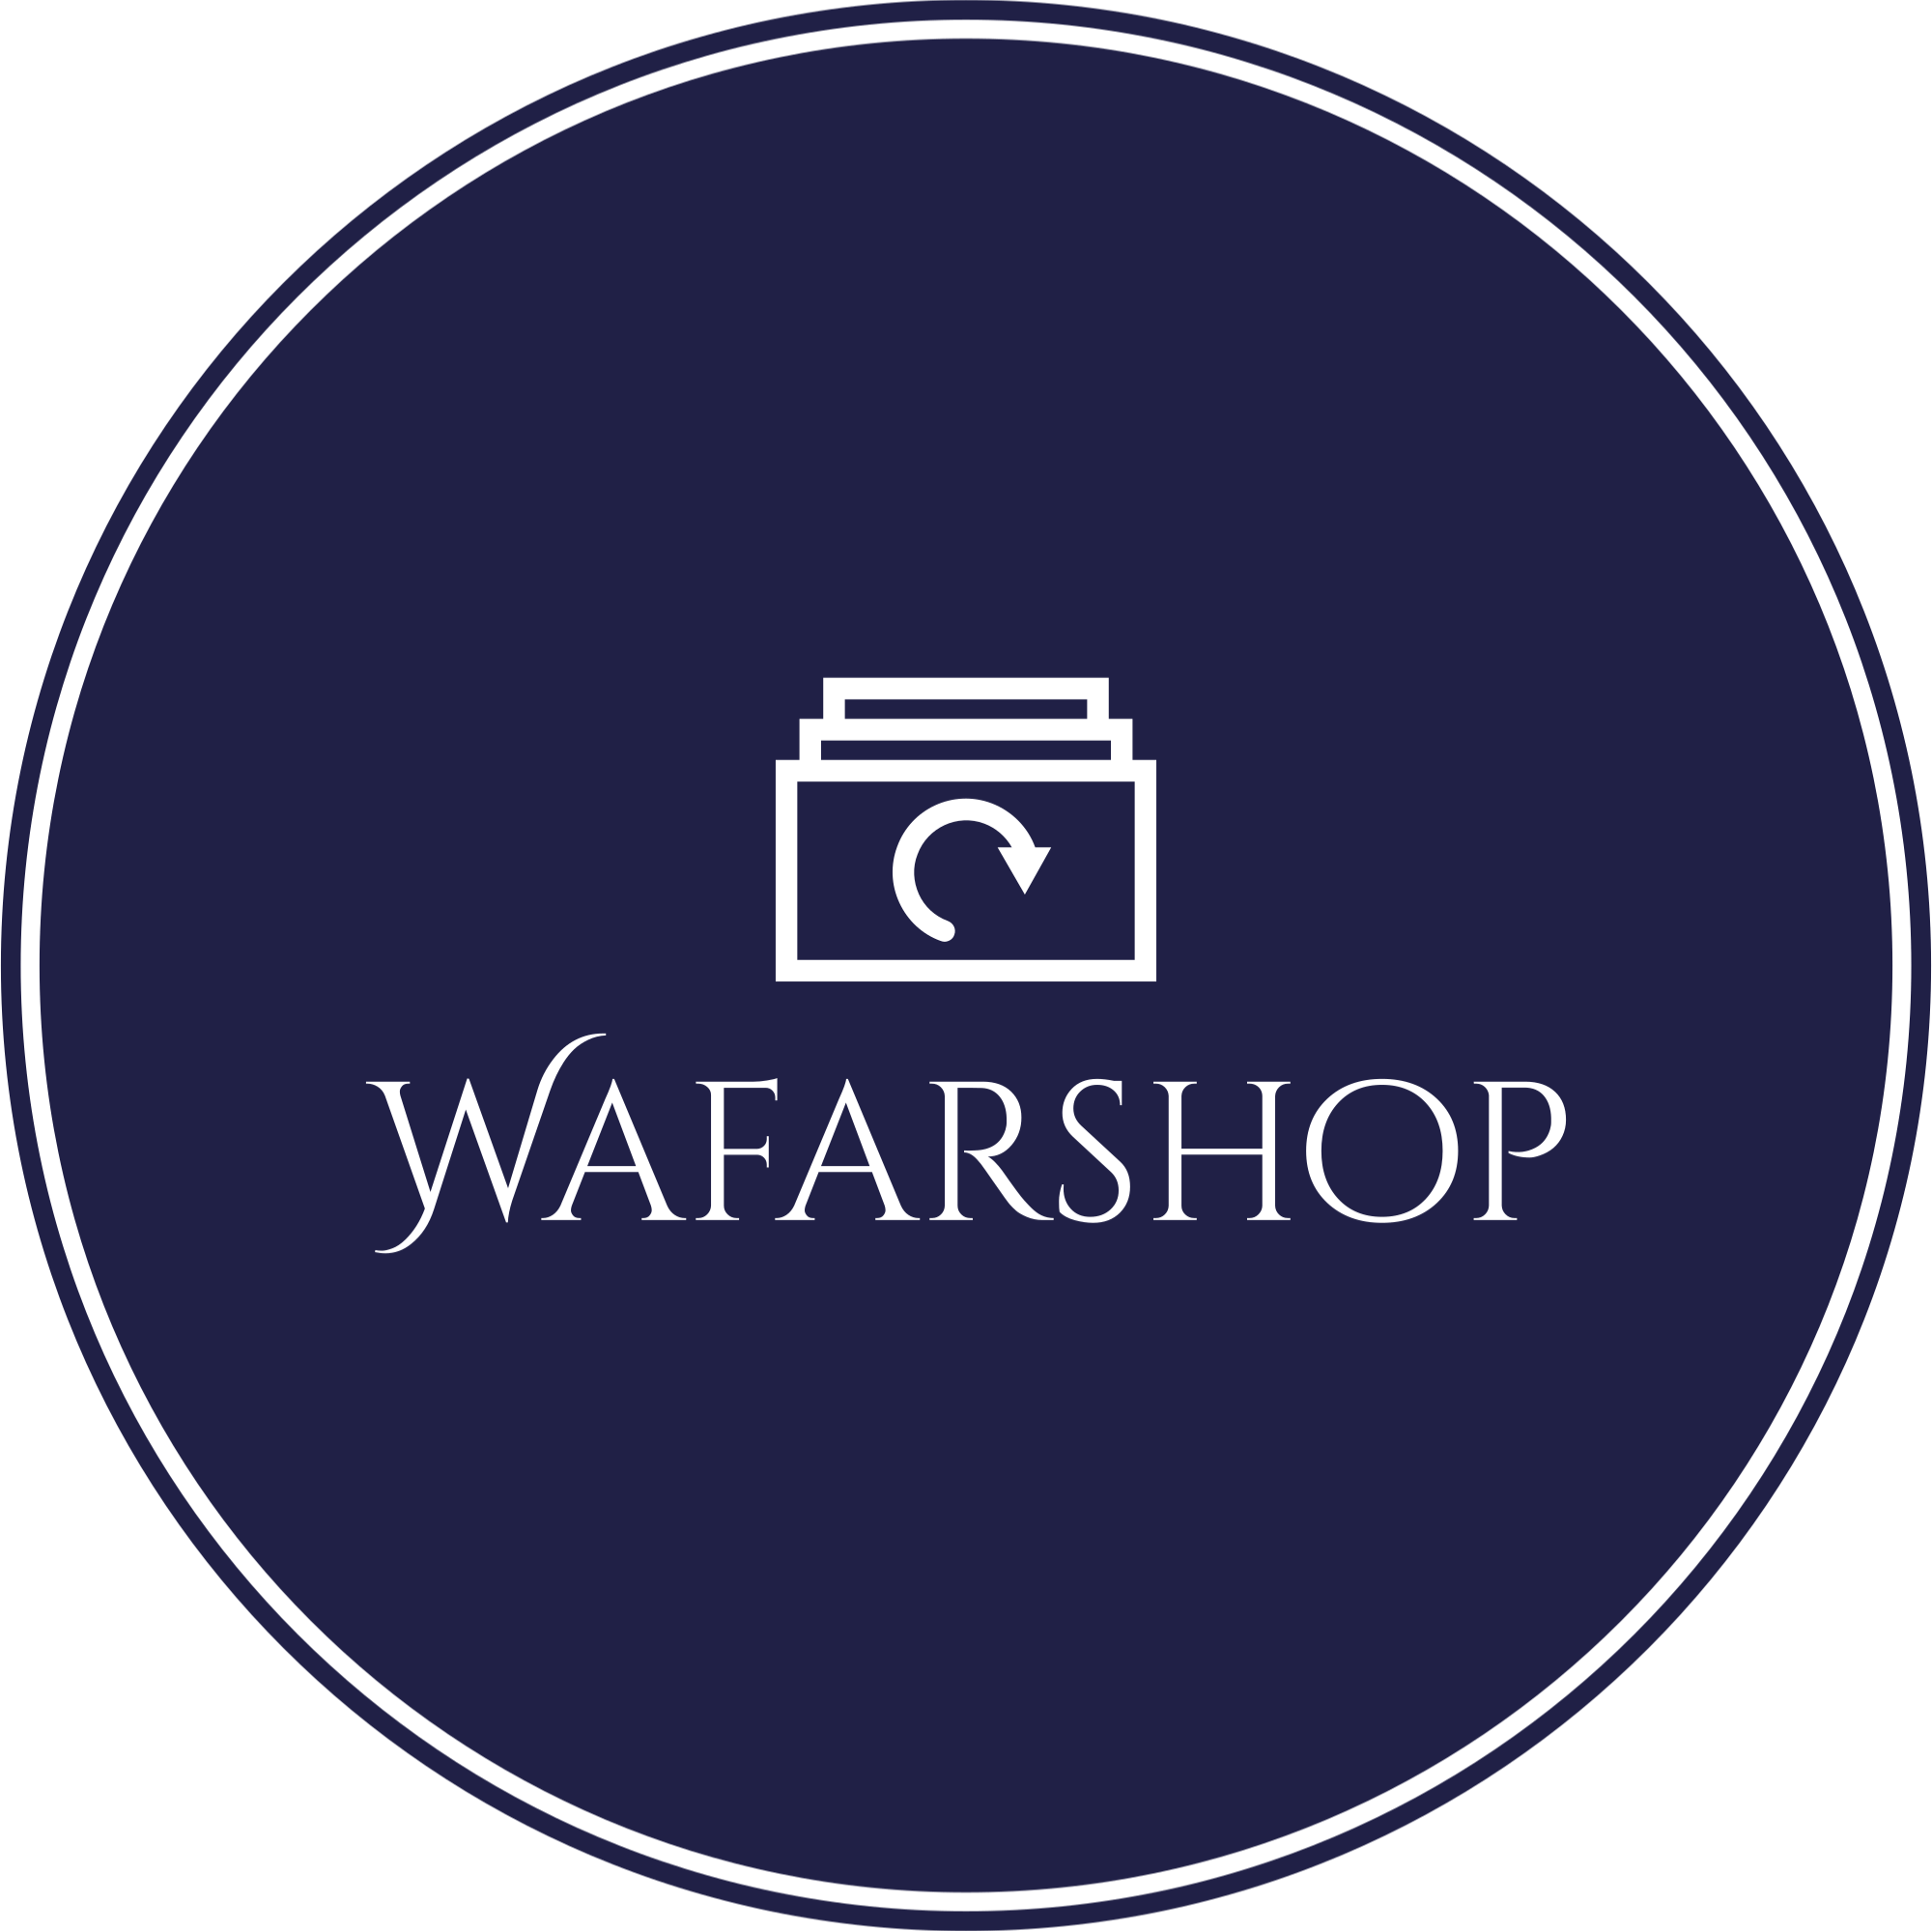 WafarShop